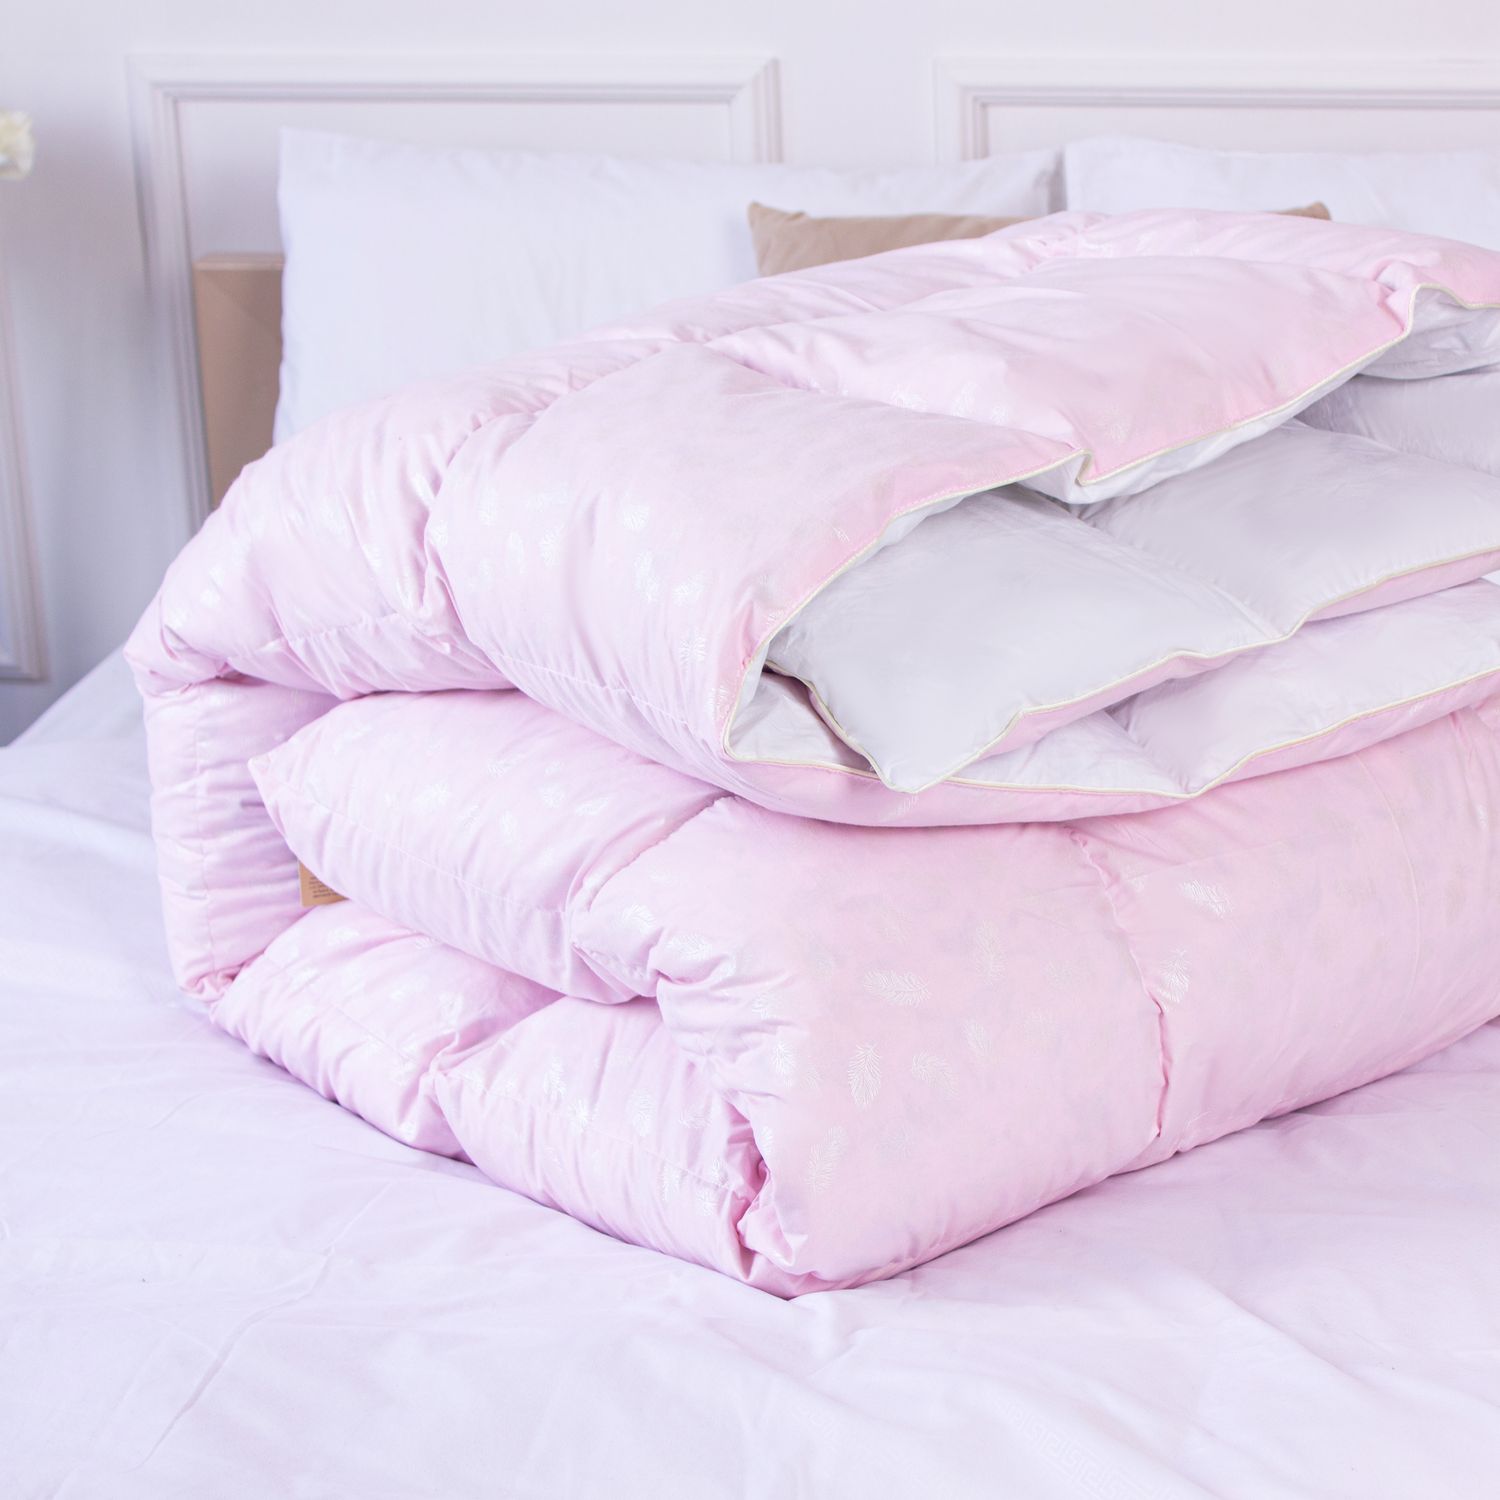 Одеяло пуховое MirSon Karmen №1829 Bio-Pink, 90% пух, полуторное, 215x155, розовое (2200003012941) - фото 3